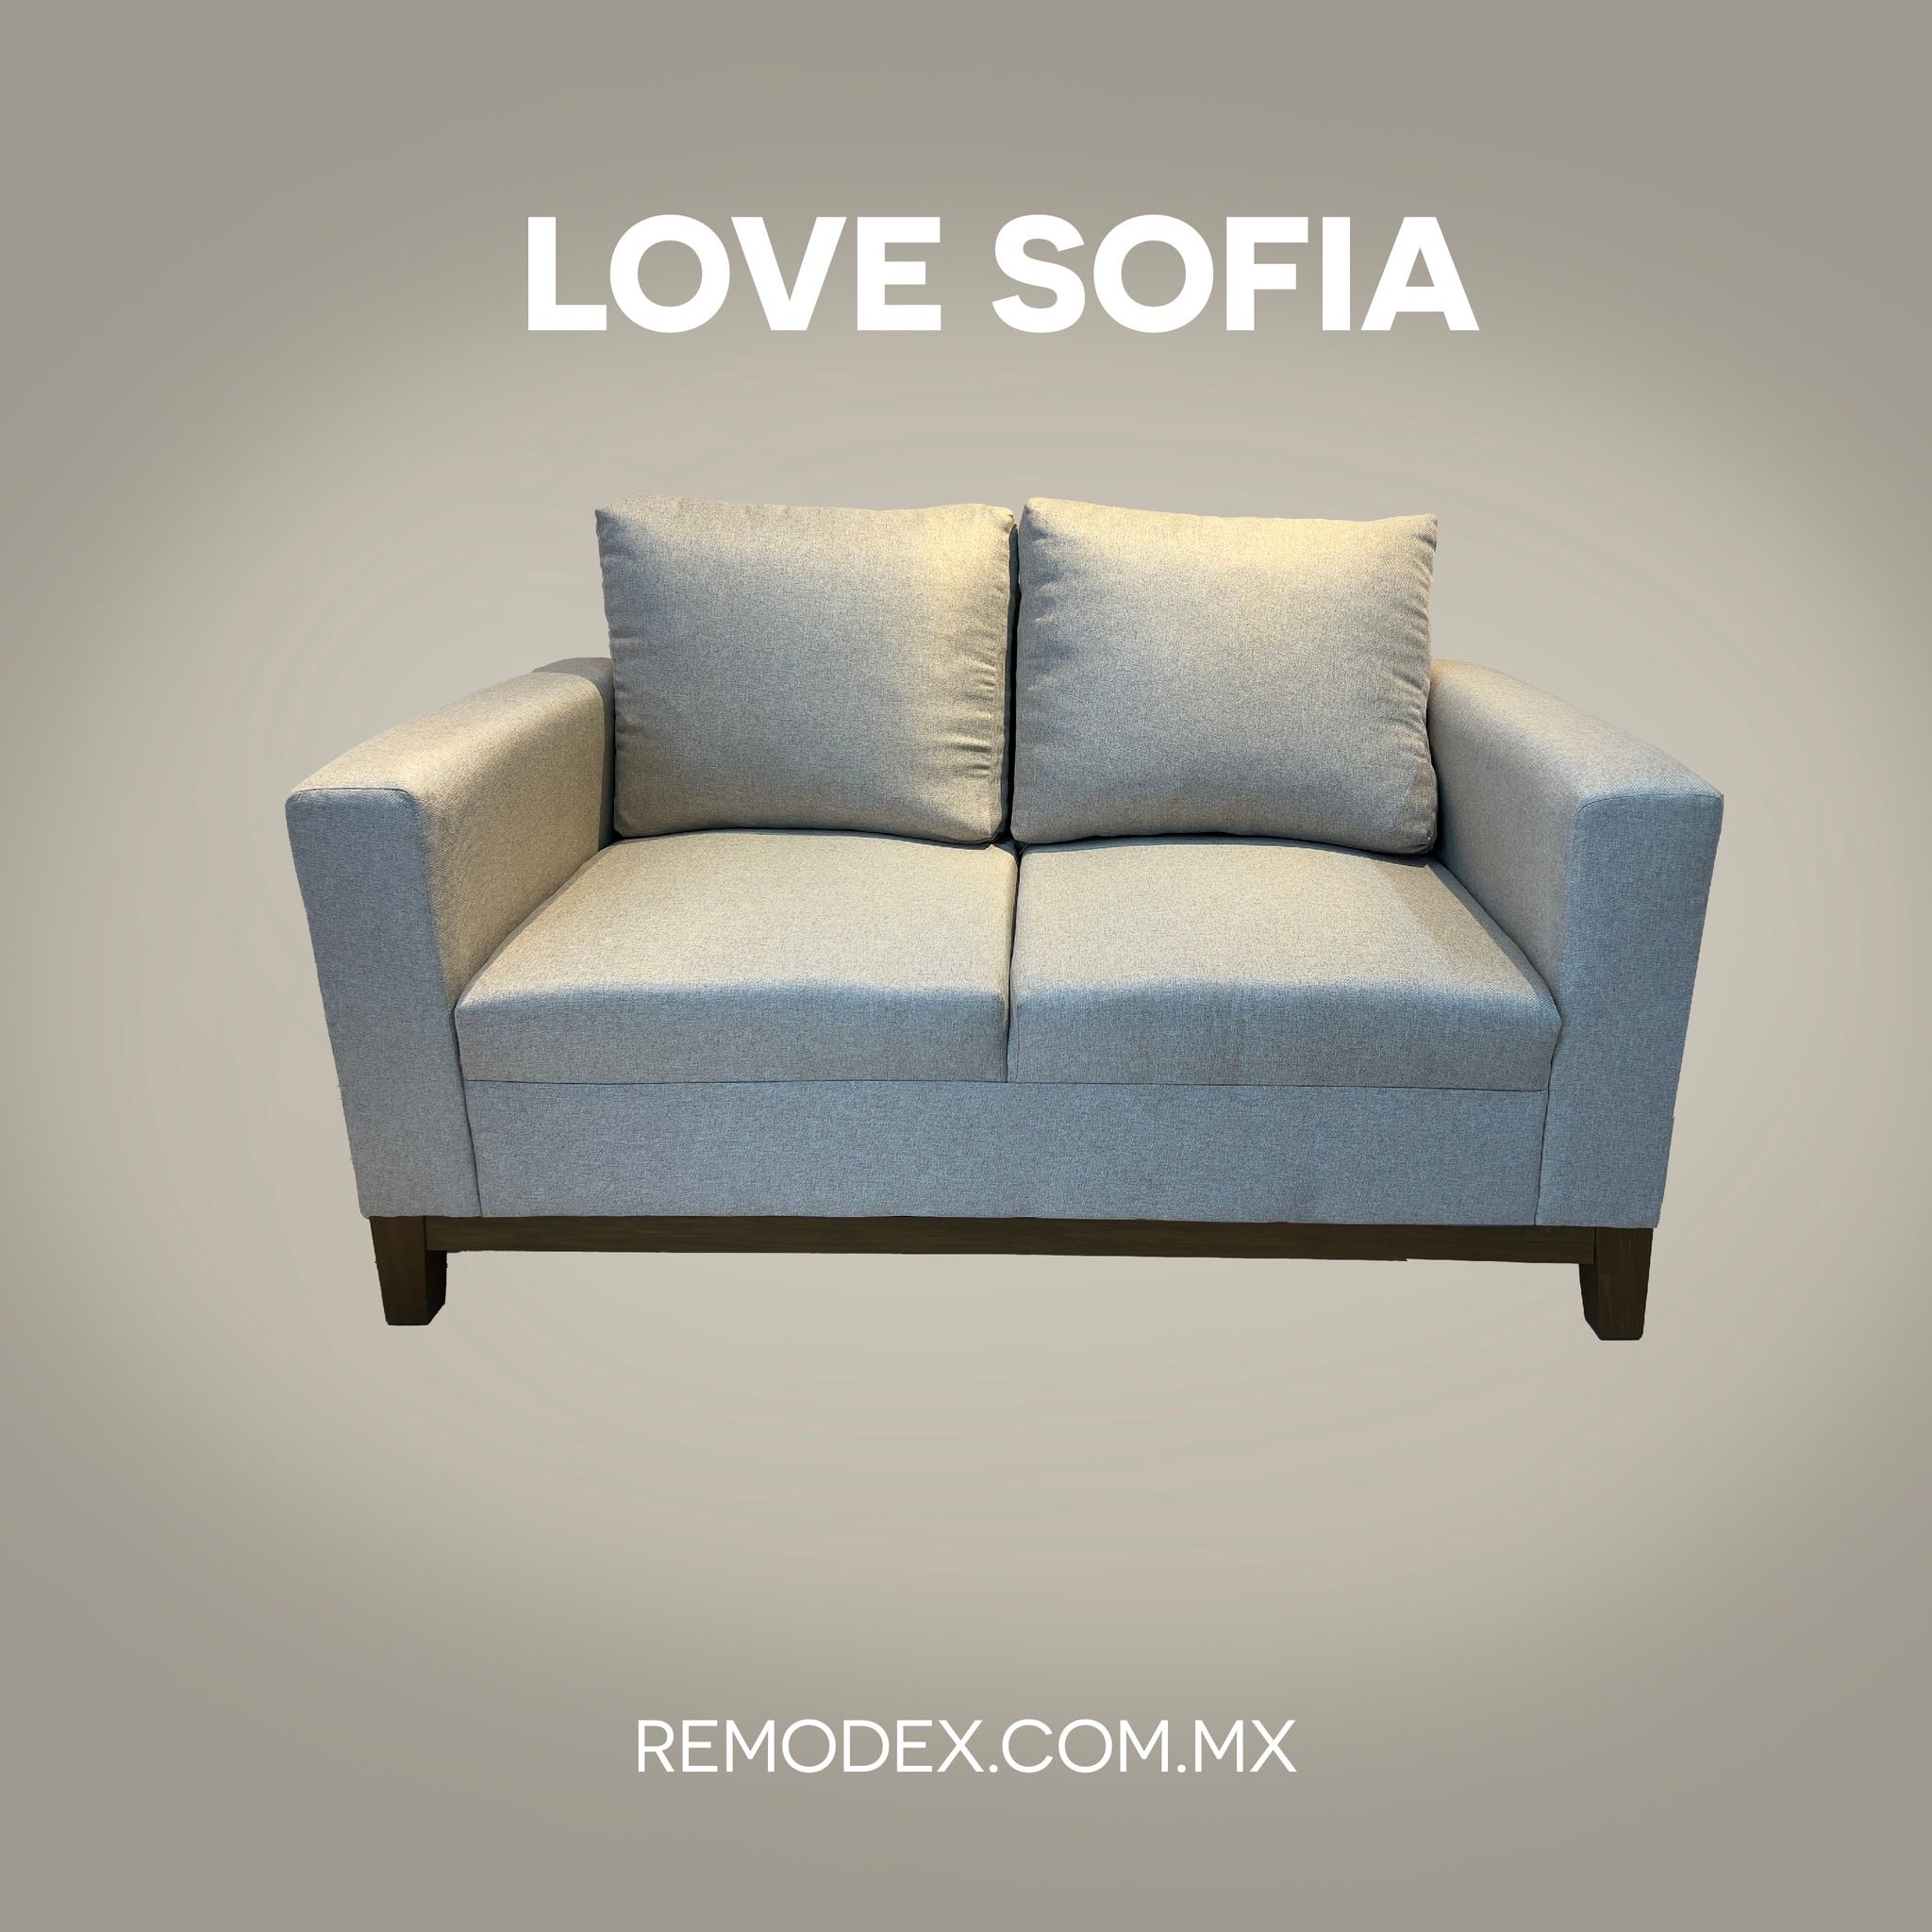 LOVE SEAT SOFIA